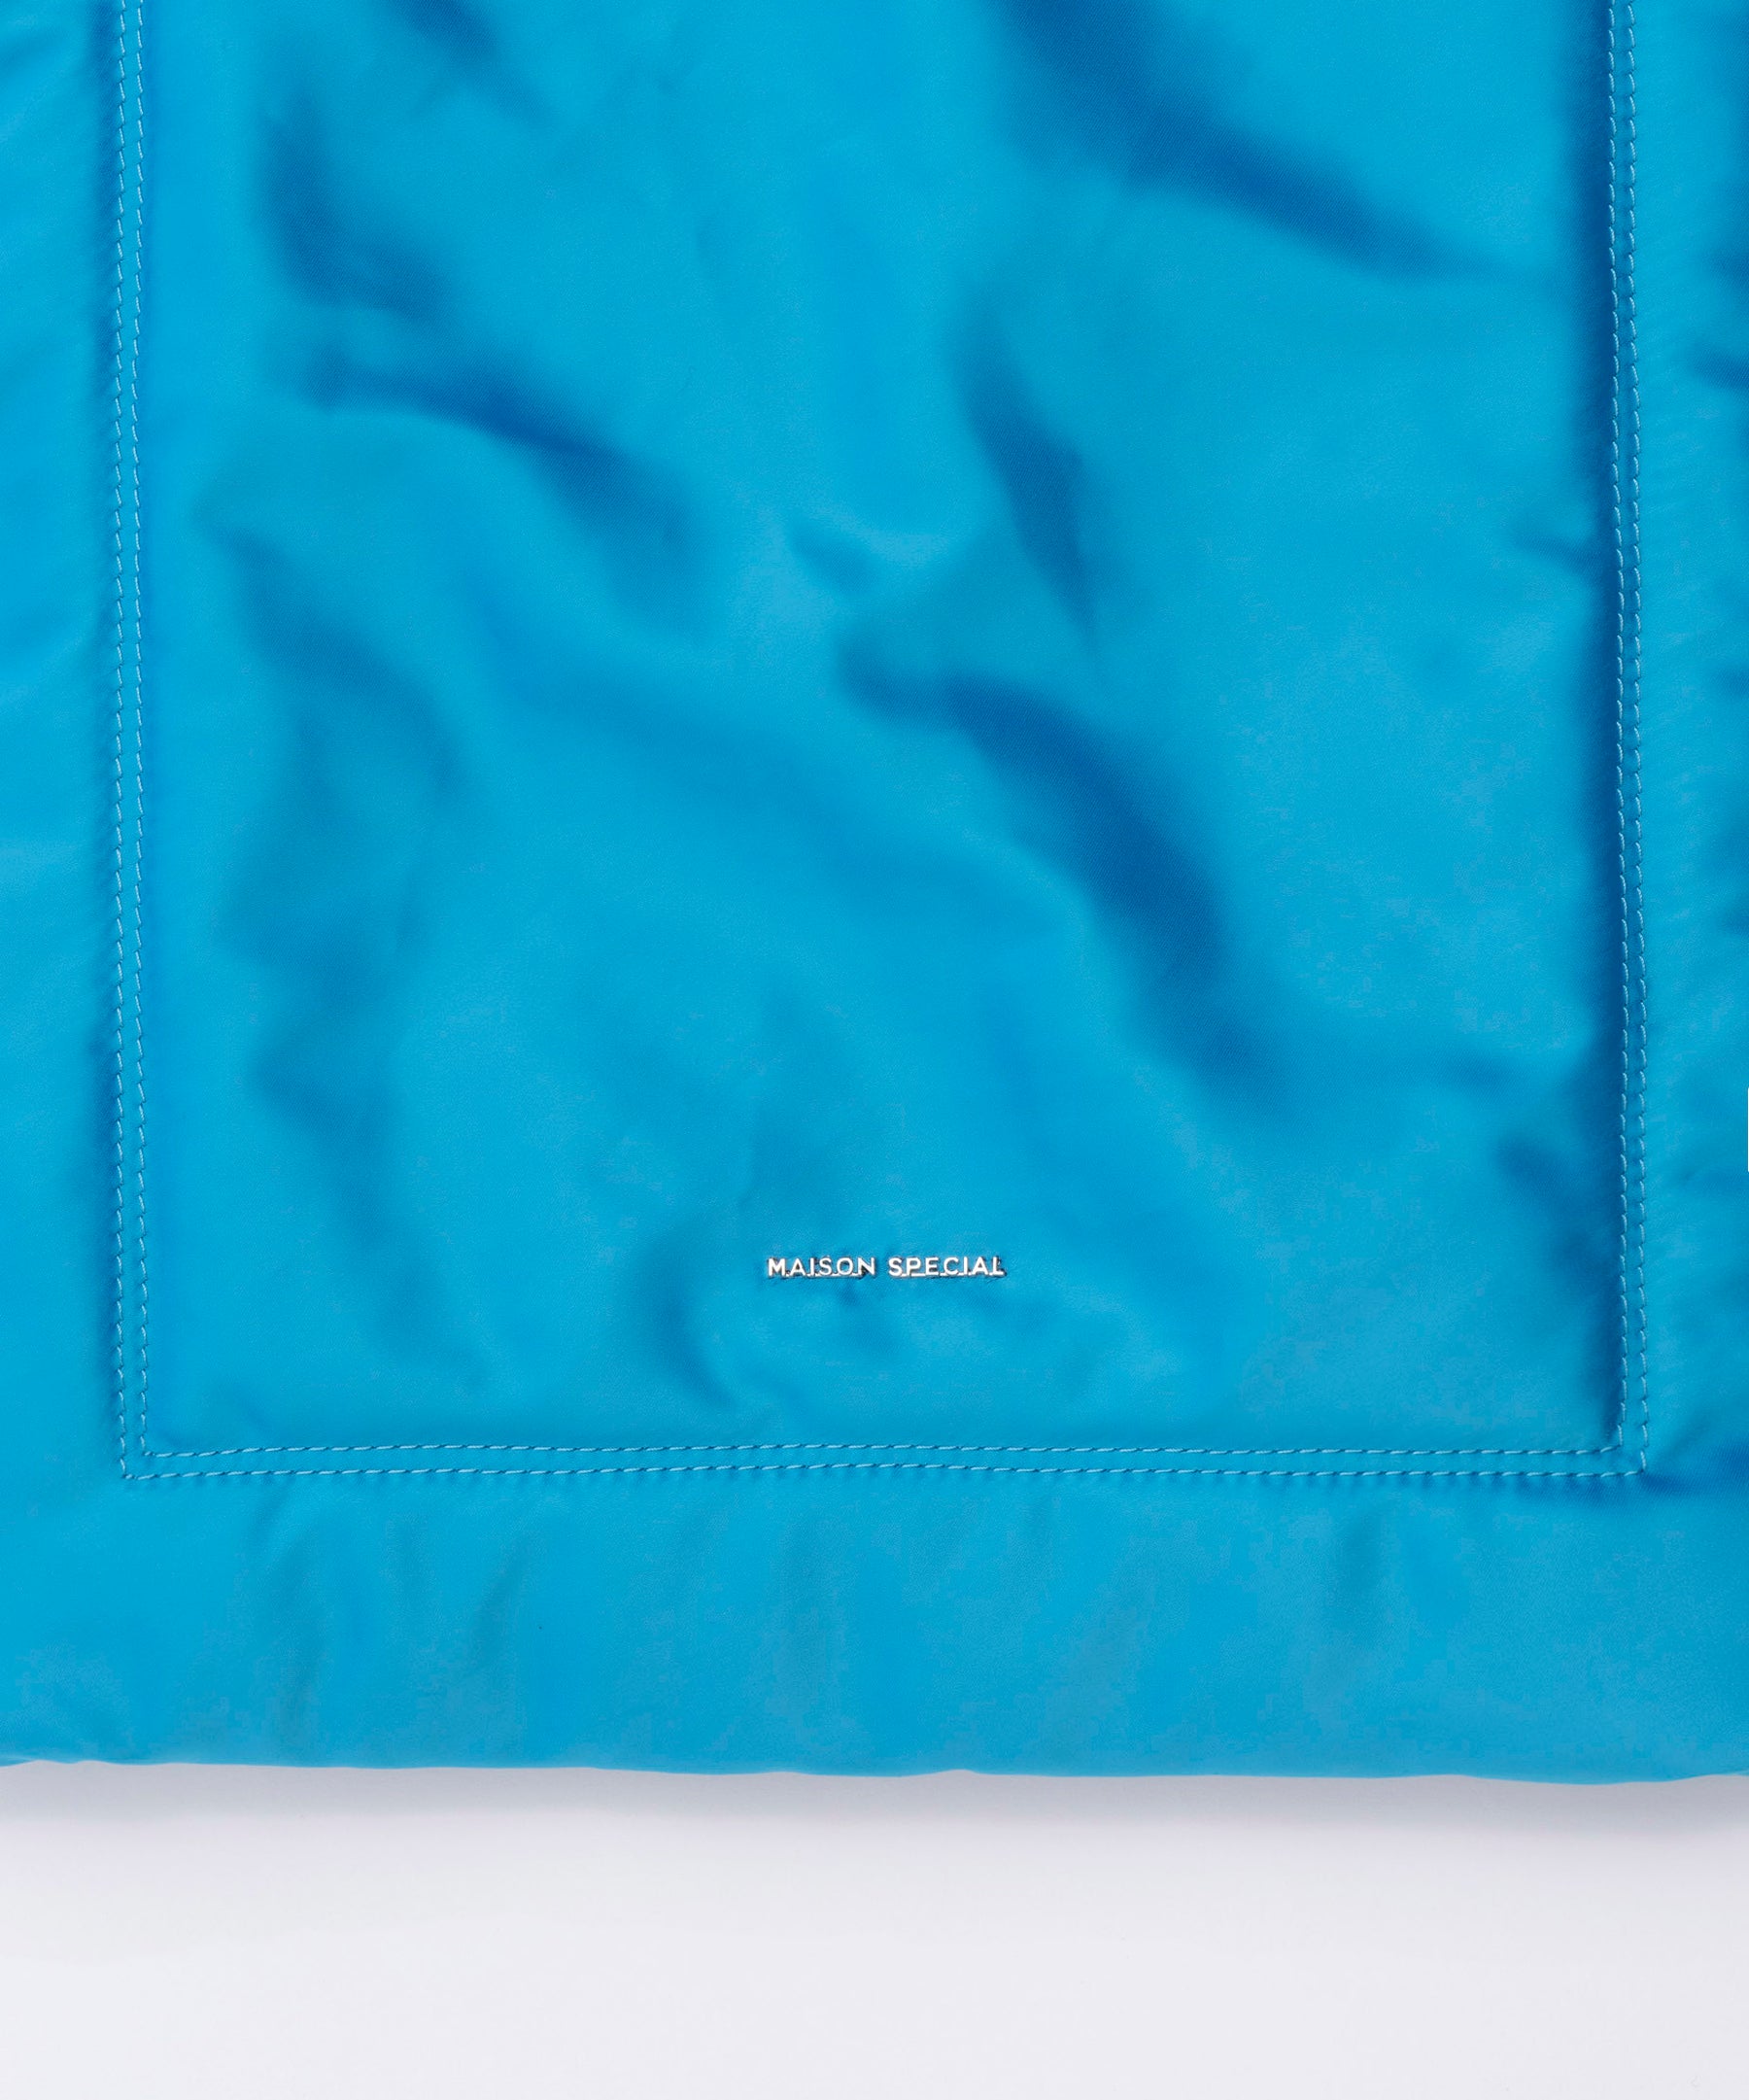 Multi-Fabric Puffer Tote Bag